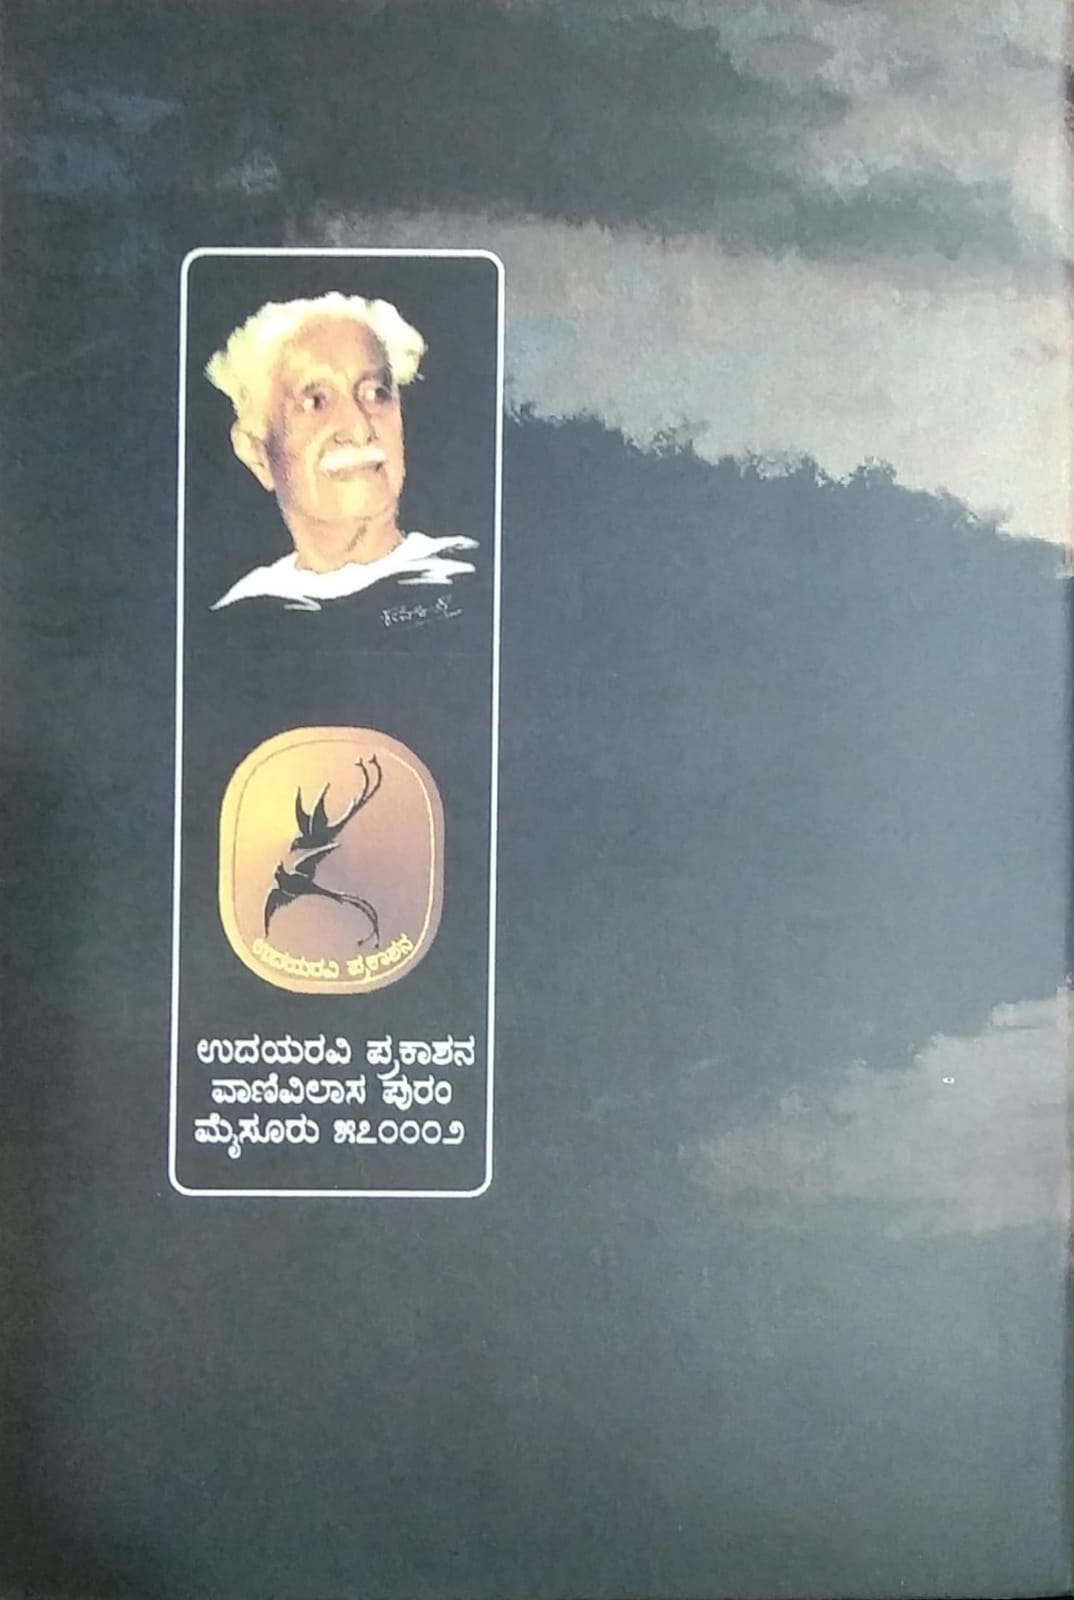 Book Name Honna Hottare , Collection of Poems, Written by Kuvempu, Published by Pustaka Prakashana, Kuvempu Books